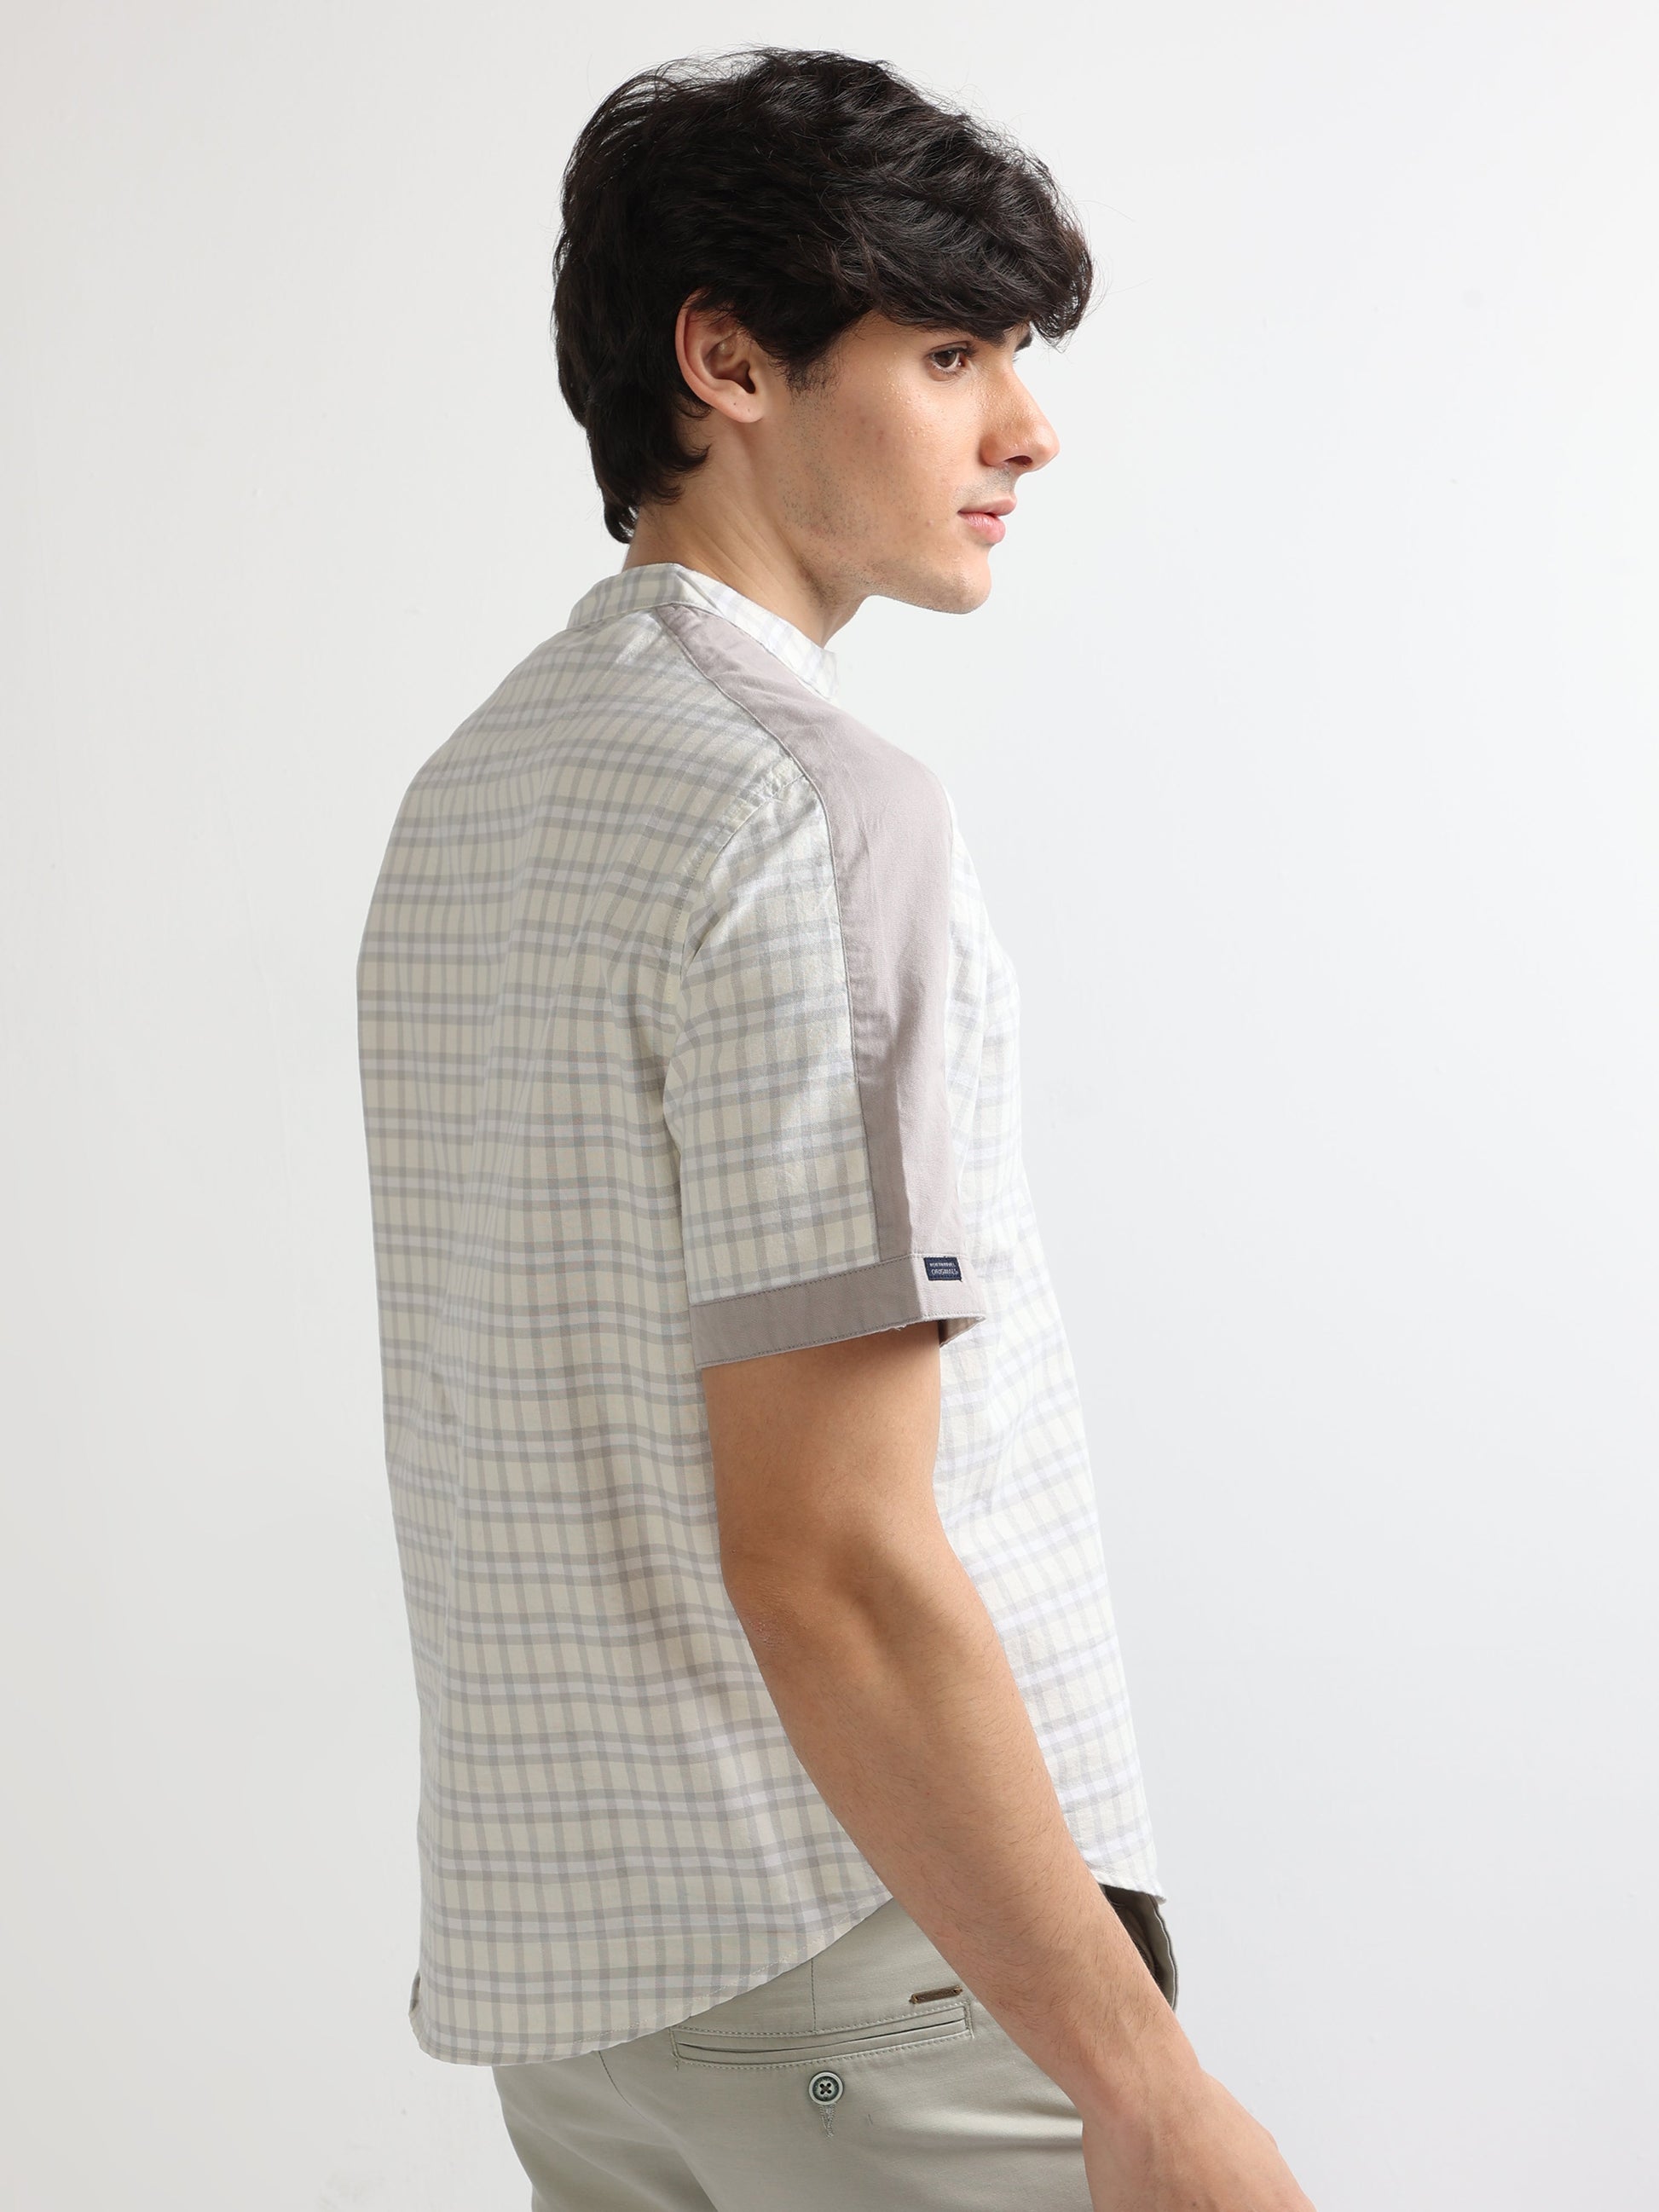 Buy Half Sleeves Chinese Collar Shoulder Panel Shirt Online.